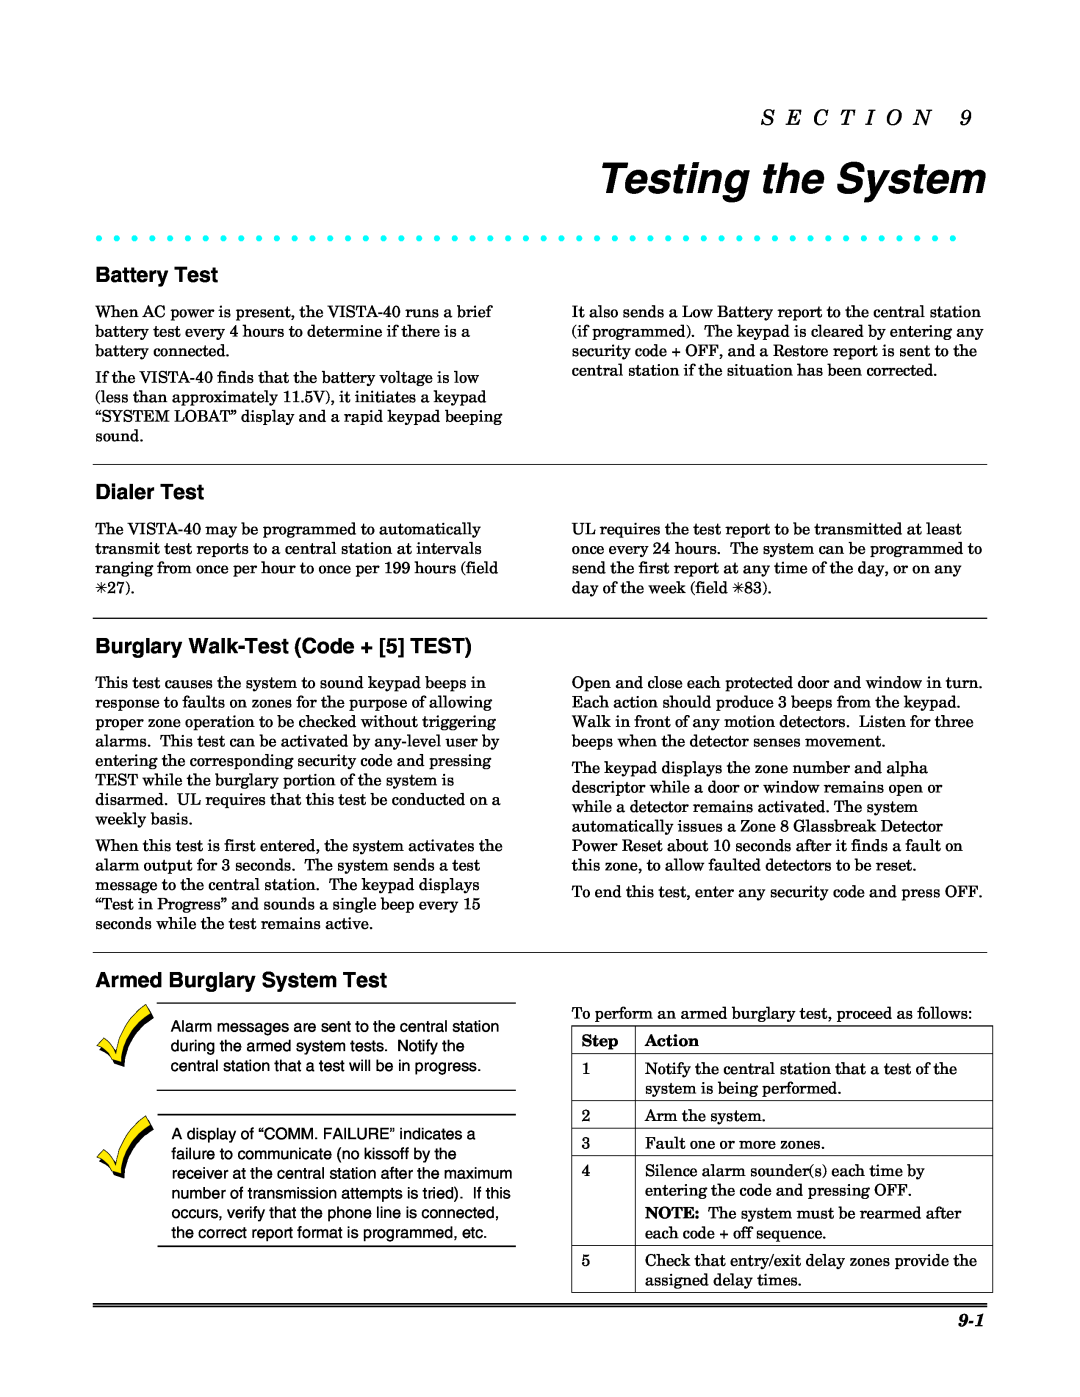 Honeywell 3.5 Testing the System, Battery Test, Dialer Test, Burglary Walk-TestCode + 5 TEST, Armed Burglary System Test 